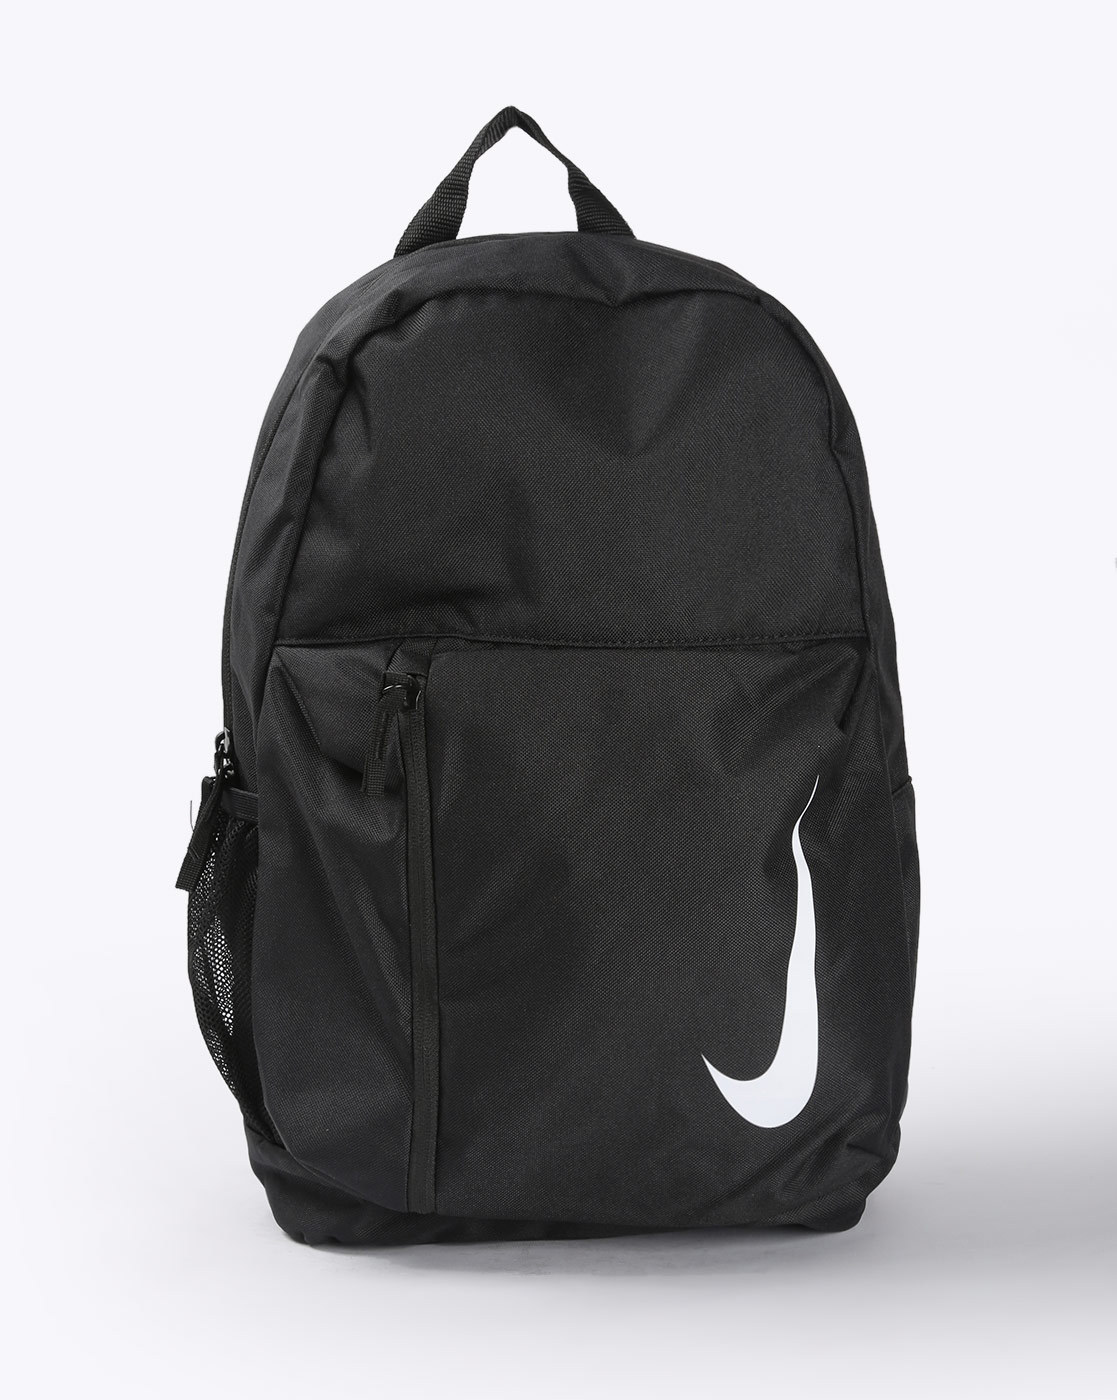 intencional radio Grabar Buy Black Backpacks for Men by NIKE Online | Ajio.com